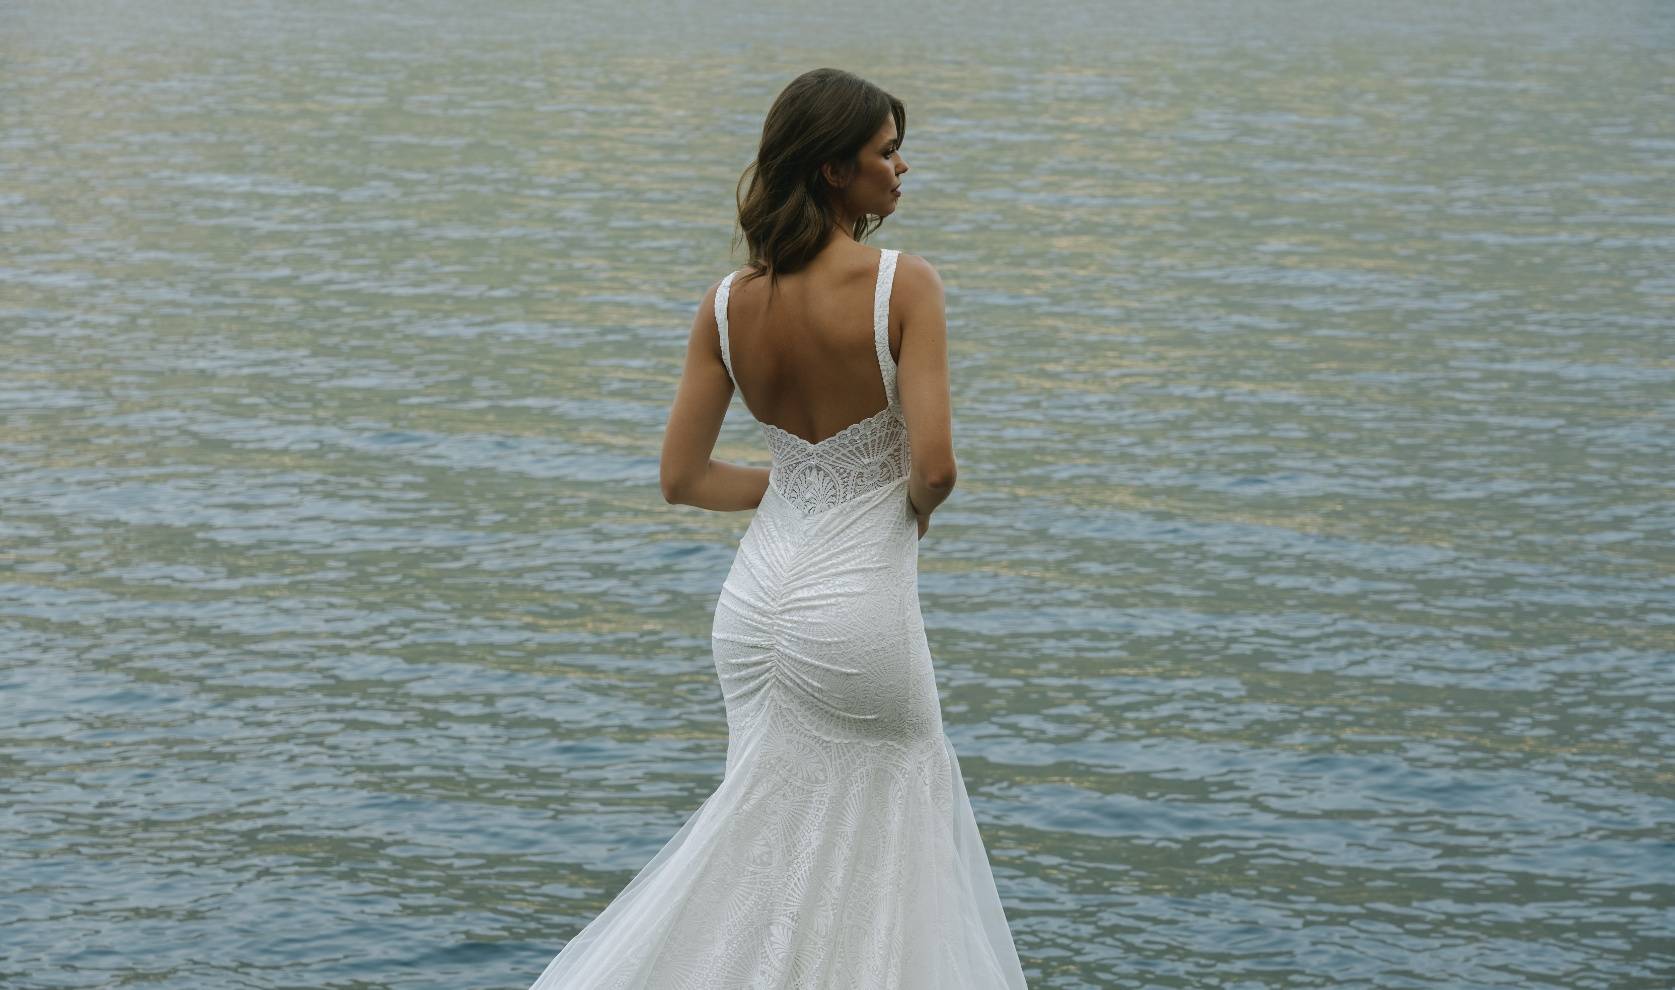 Modèle en robe Sienna avec l'océan en arrière-plan